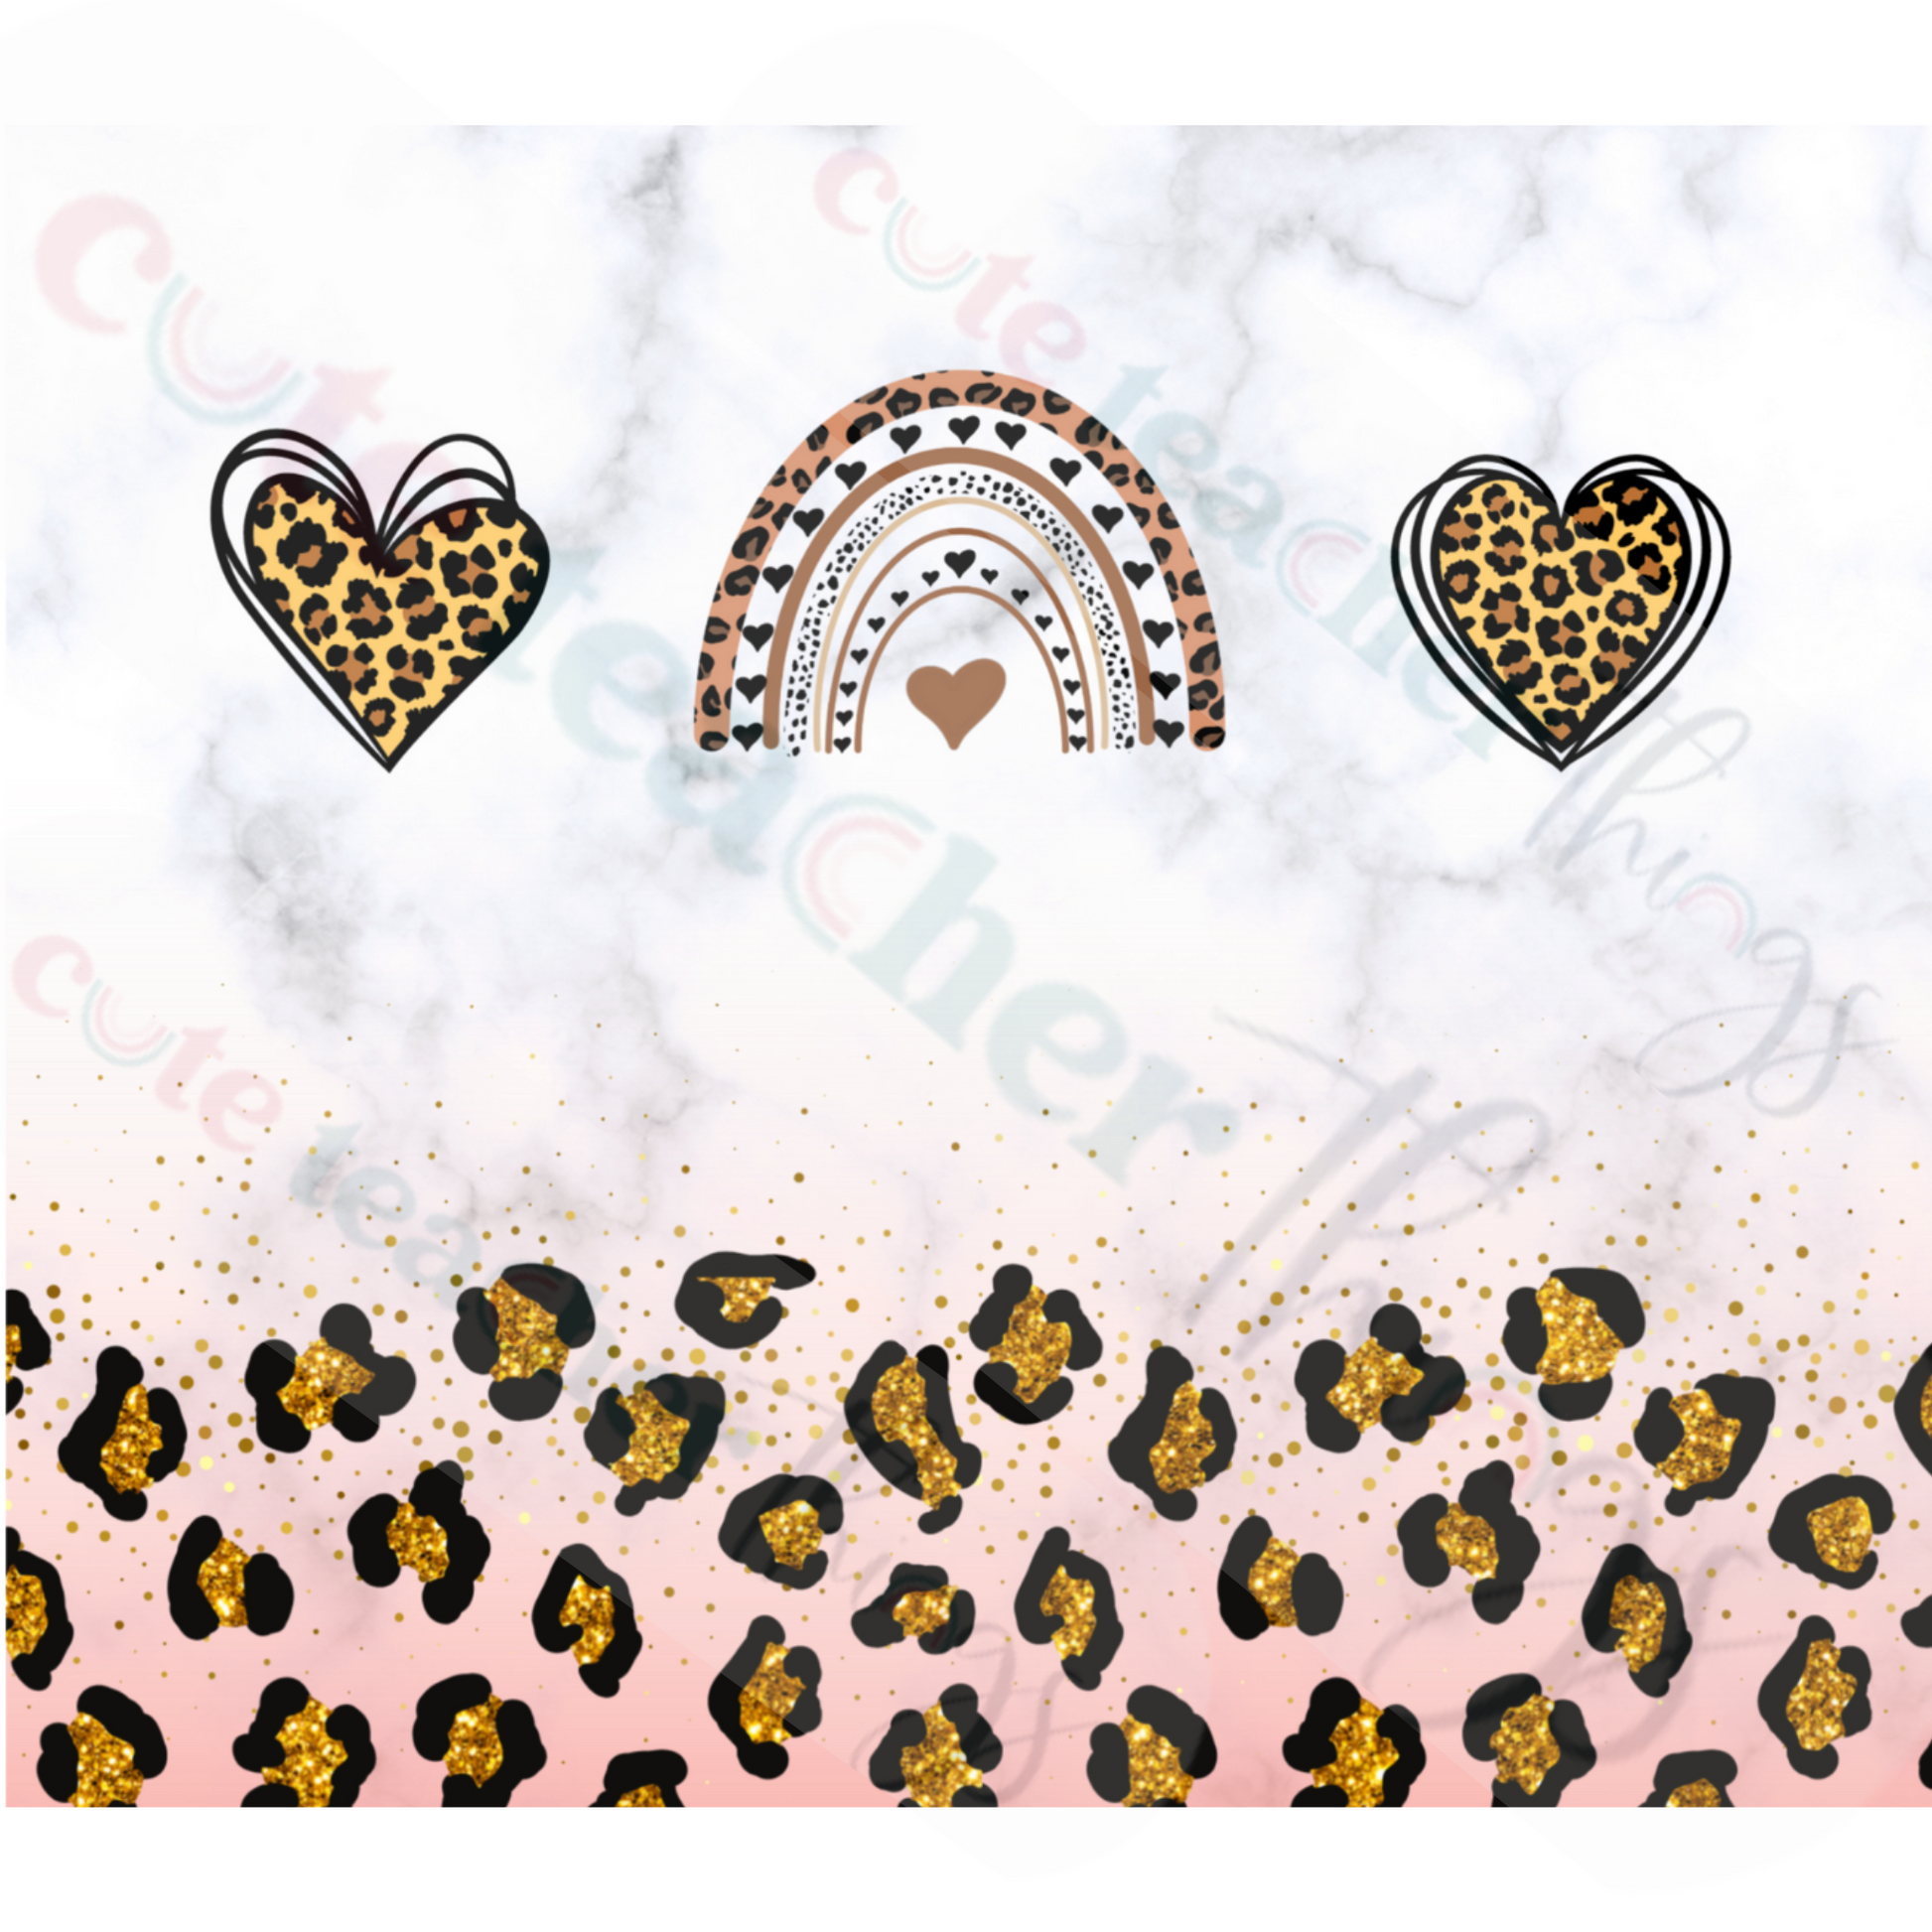 heart and rainbow leopard print design